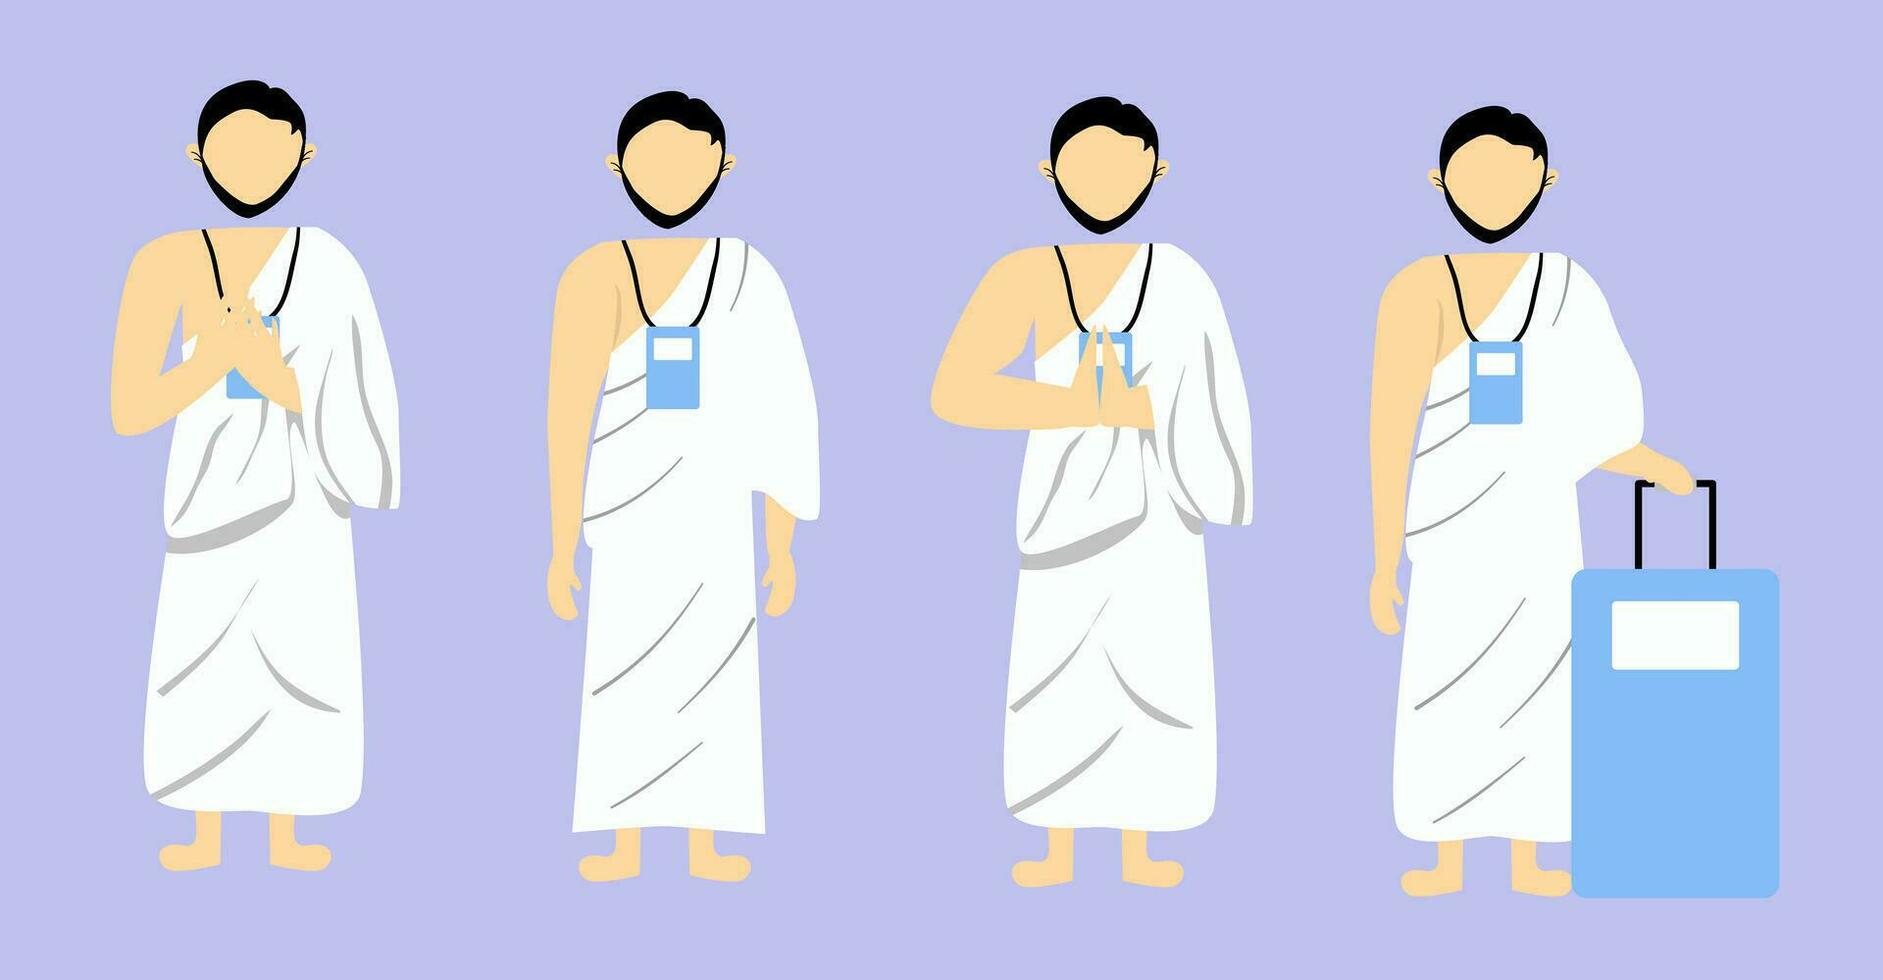 conjunto do muçulmano hajj sem rosto vestindo ihram, islâmico peregrinação vetor desenho animado ilustração